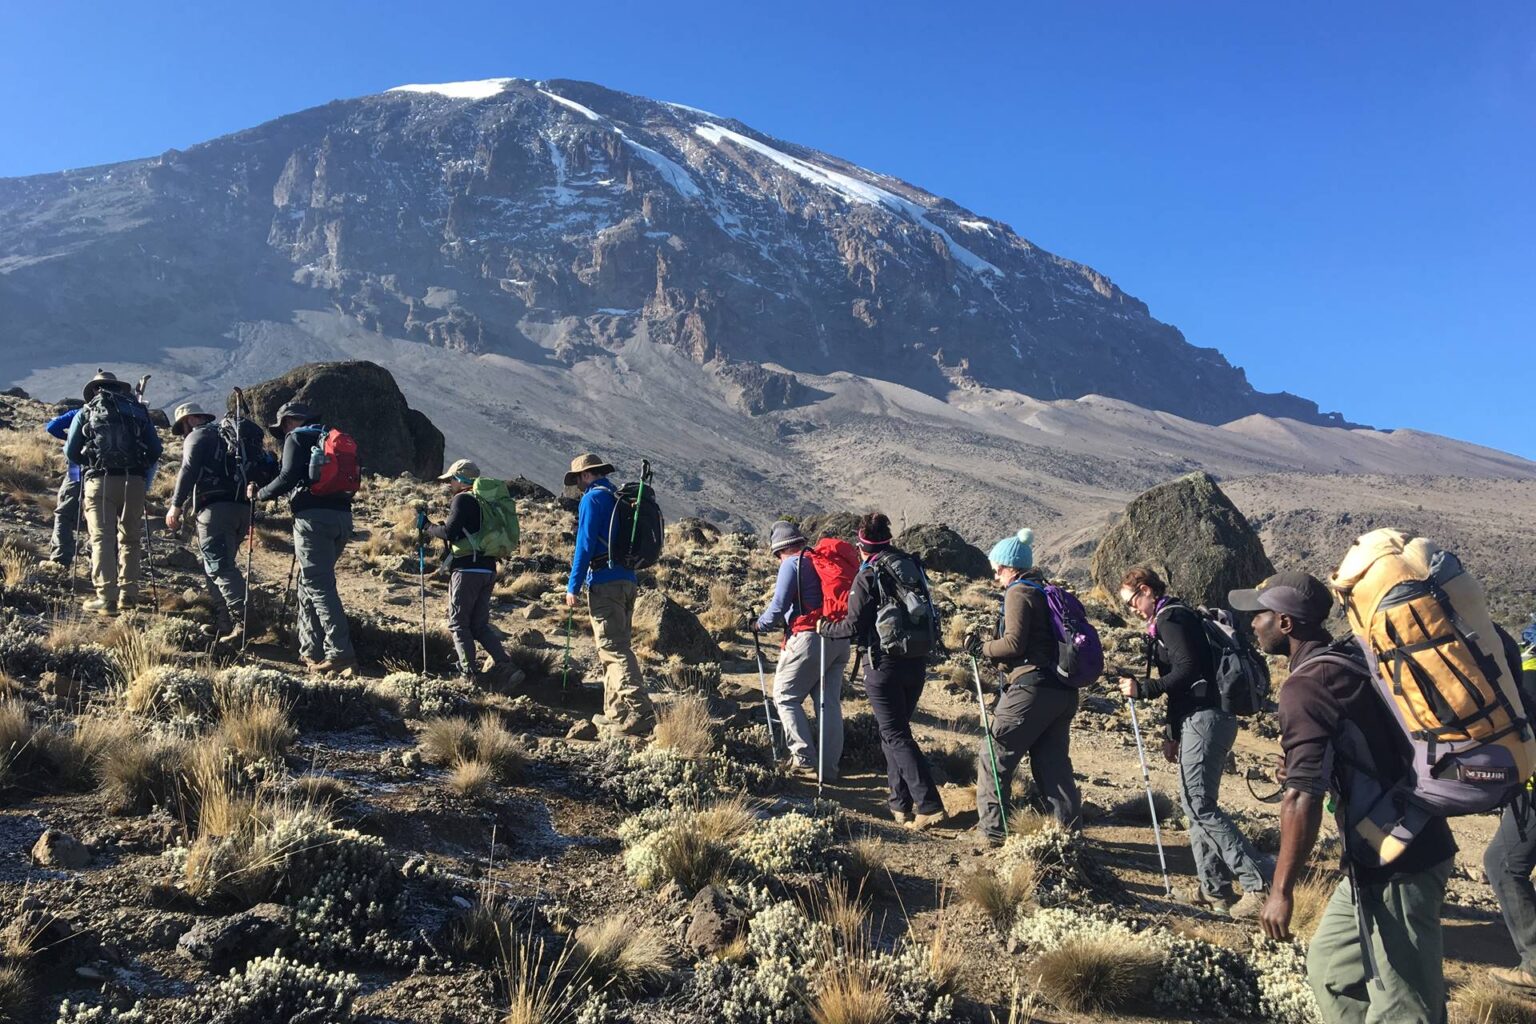 Kilimanjaro Mountain ; Serengeti National Park ; Mikumi National Park ; Trip Advisor ; The Royal Tour